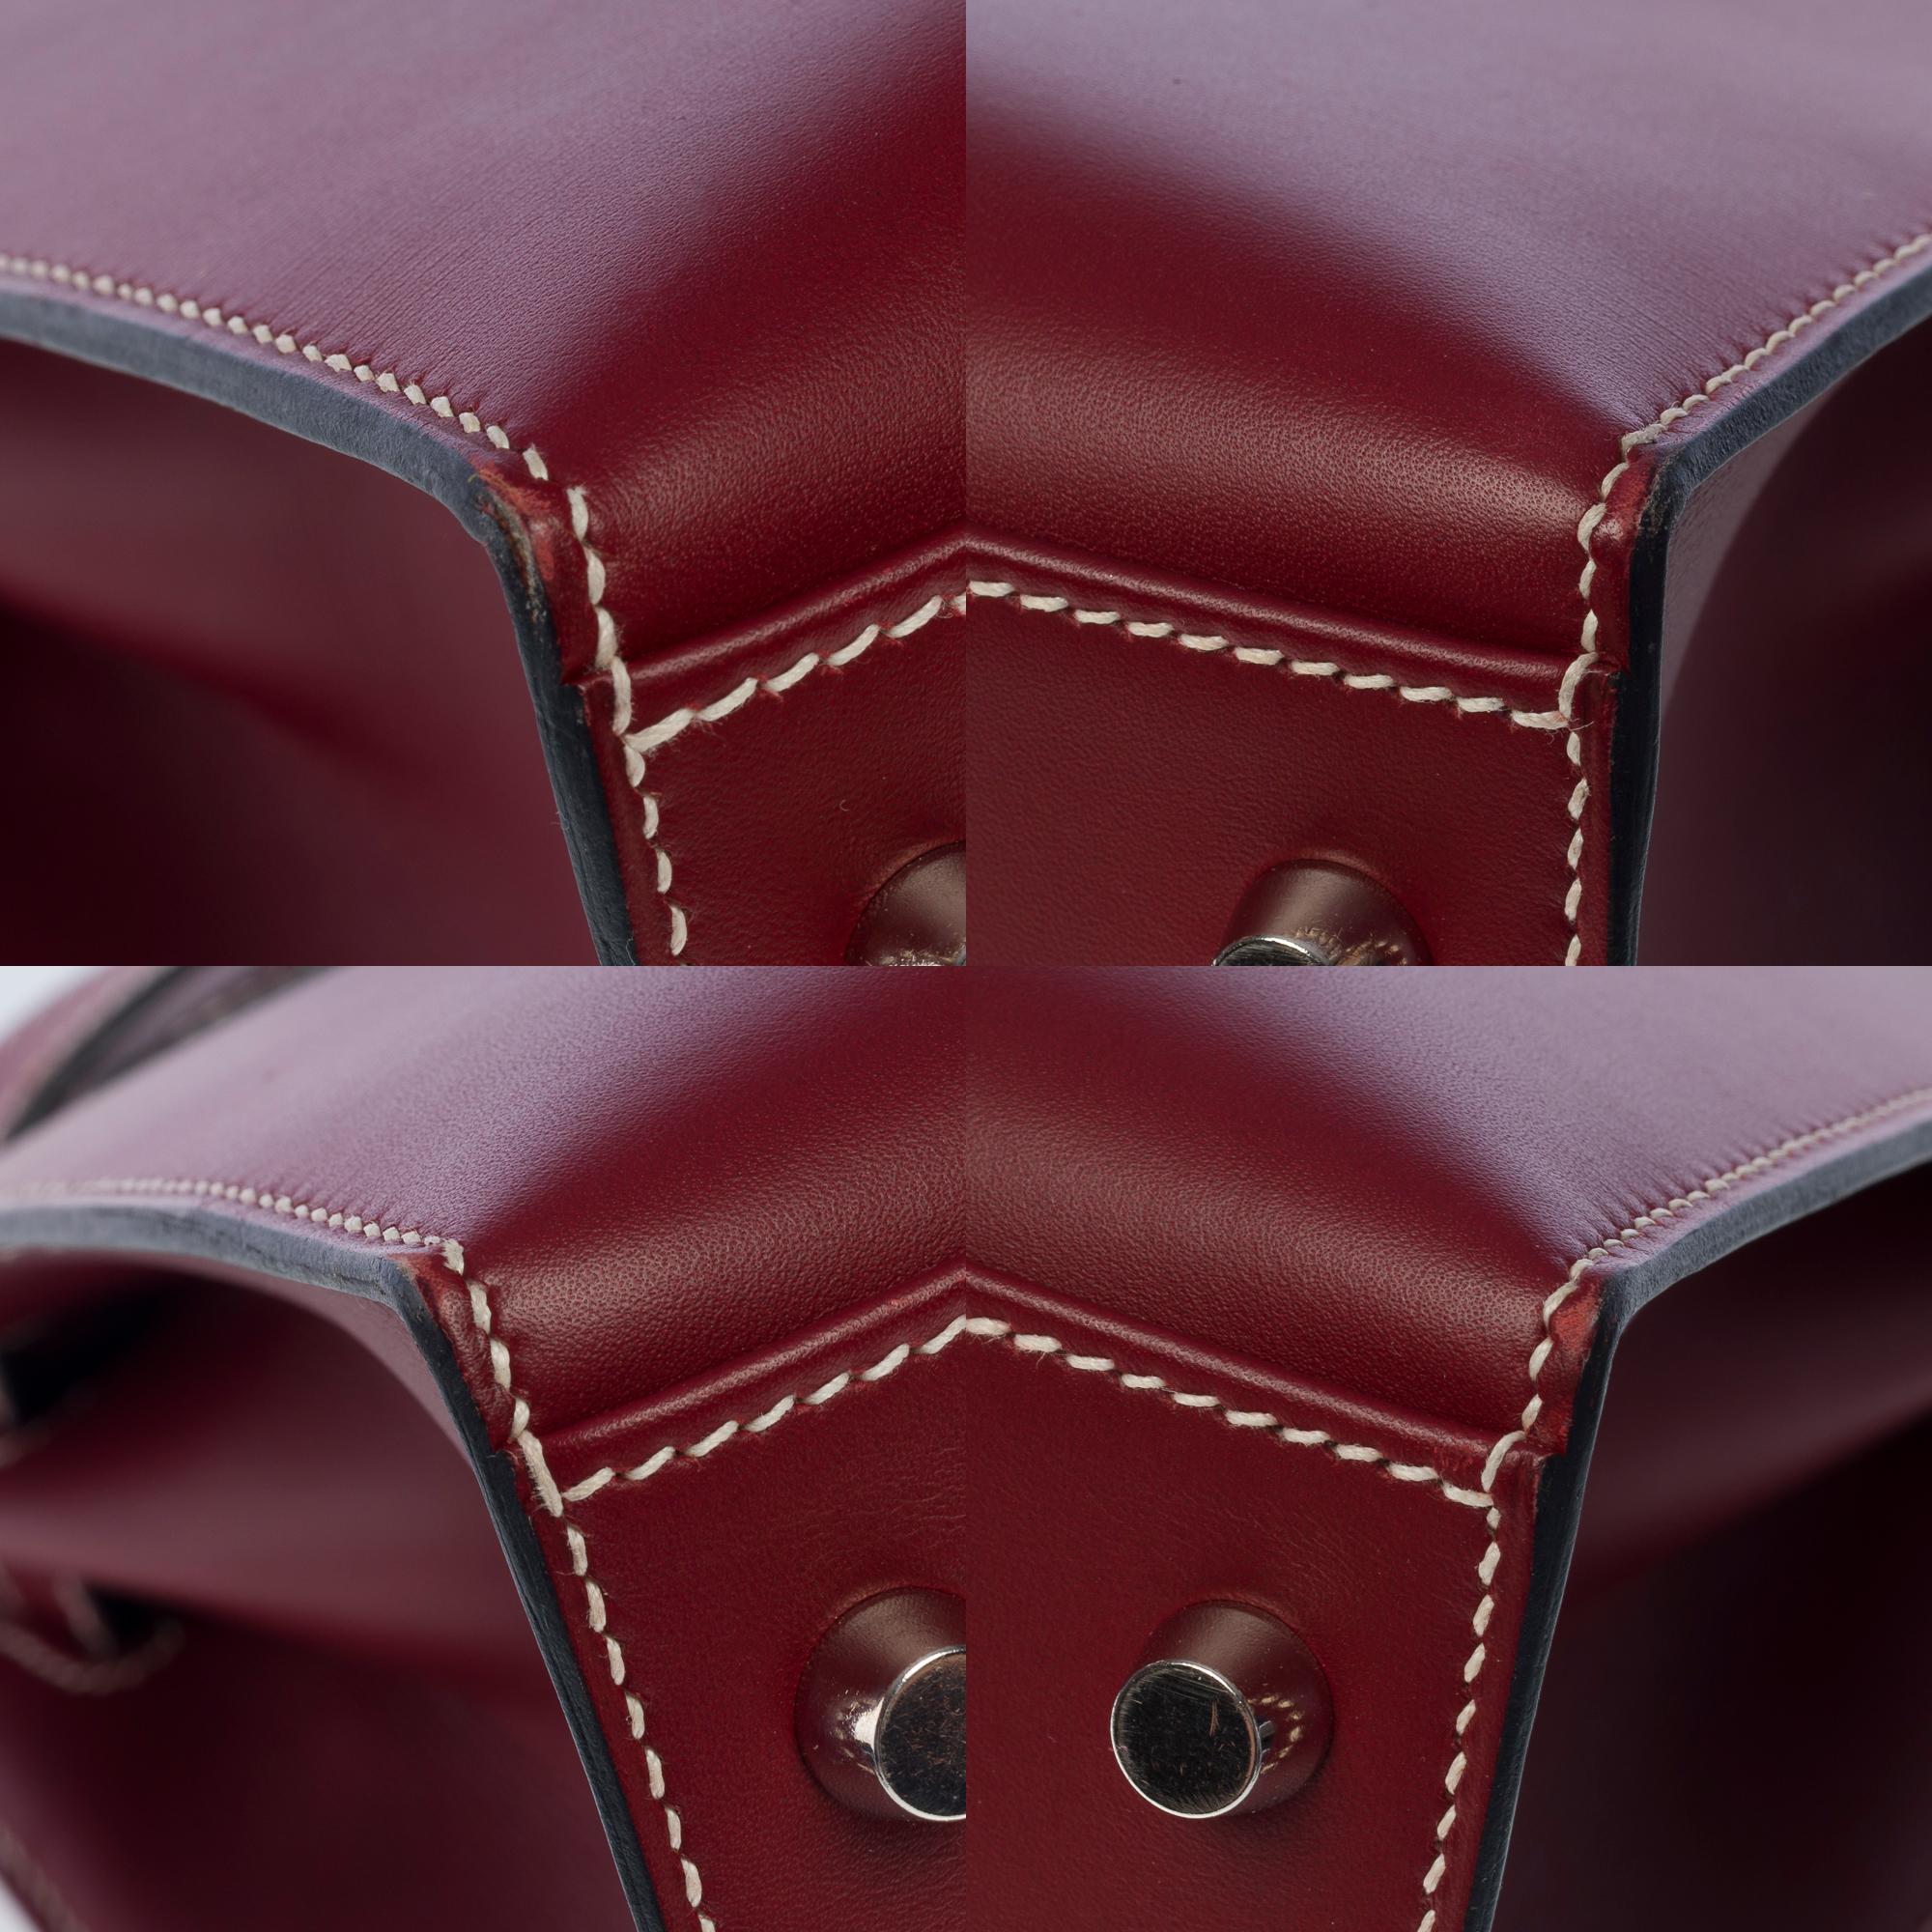 Very Rare Hermès Kelly 32 sellier handbag strap in Rouge H Chamonix leather, SHW 6